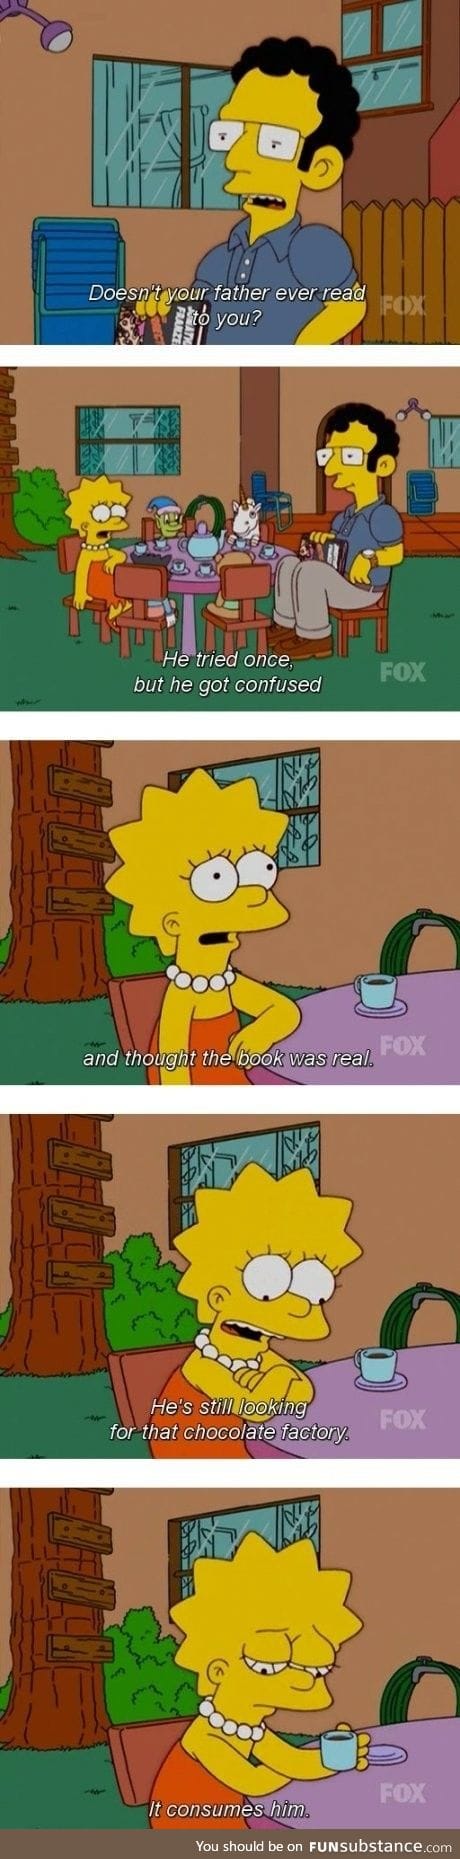 My favourite Simpson's quote